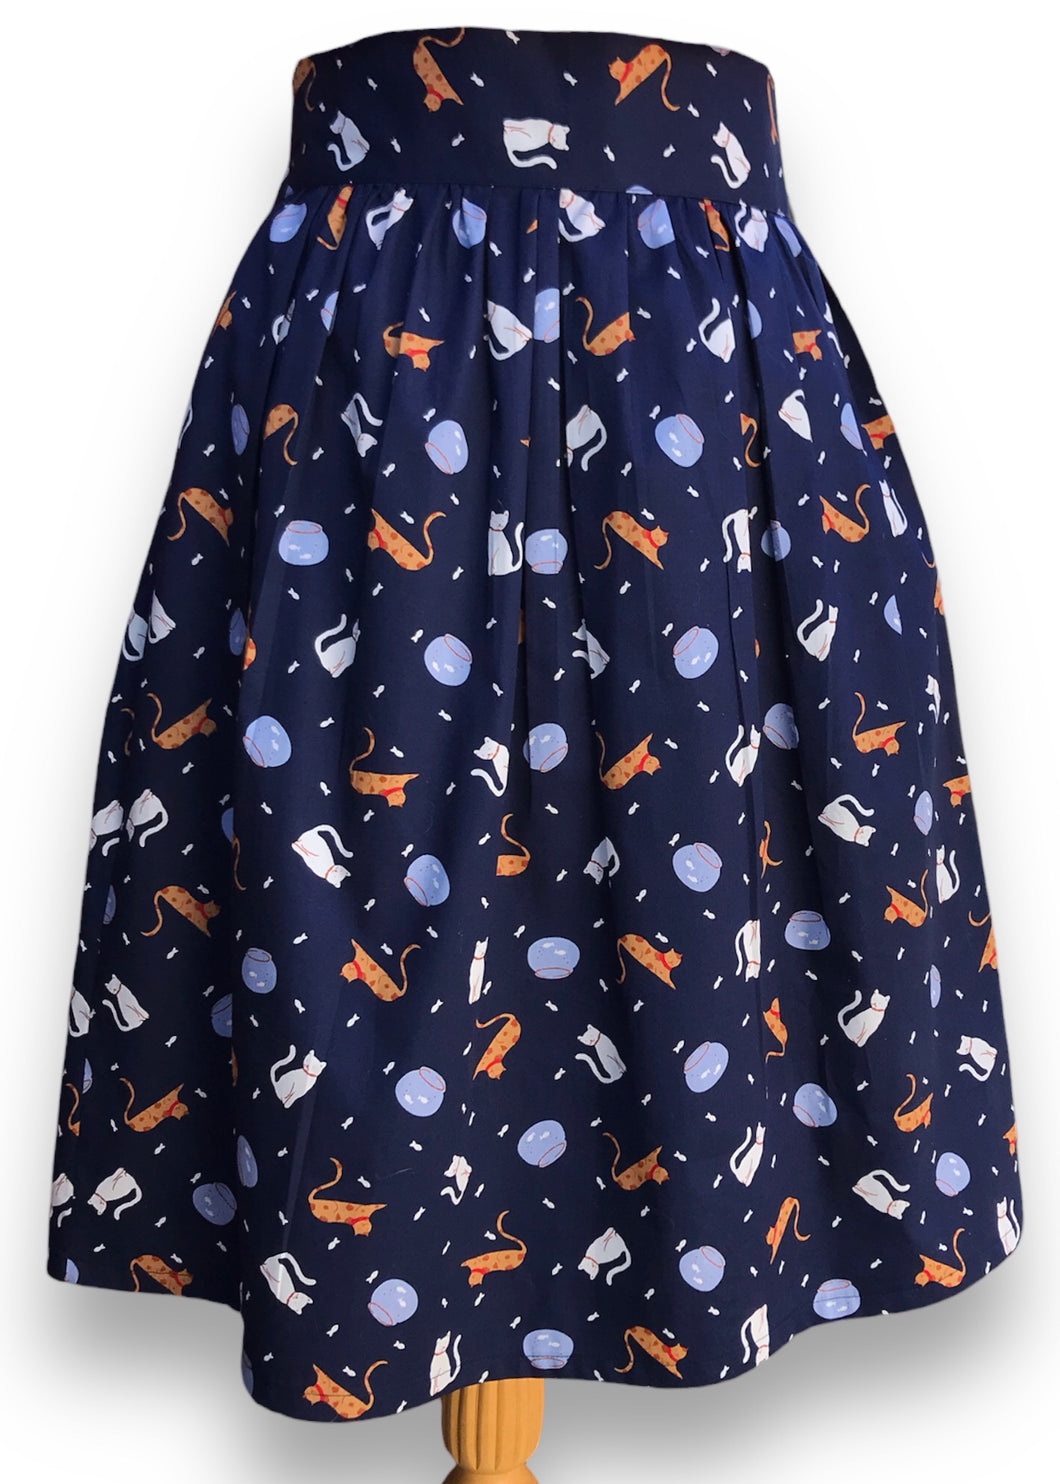 Poppy Skirt - Cats n’ Fish